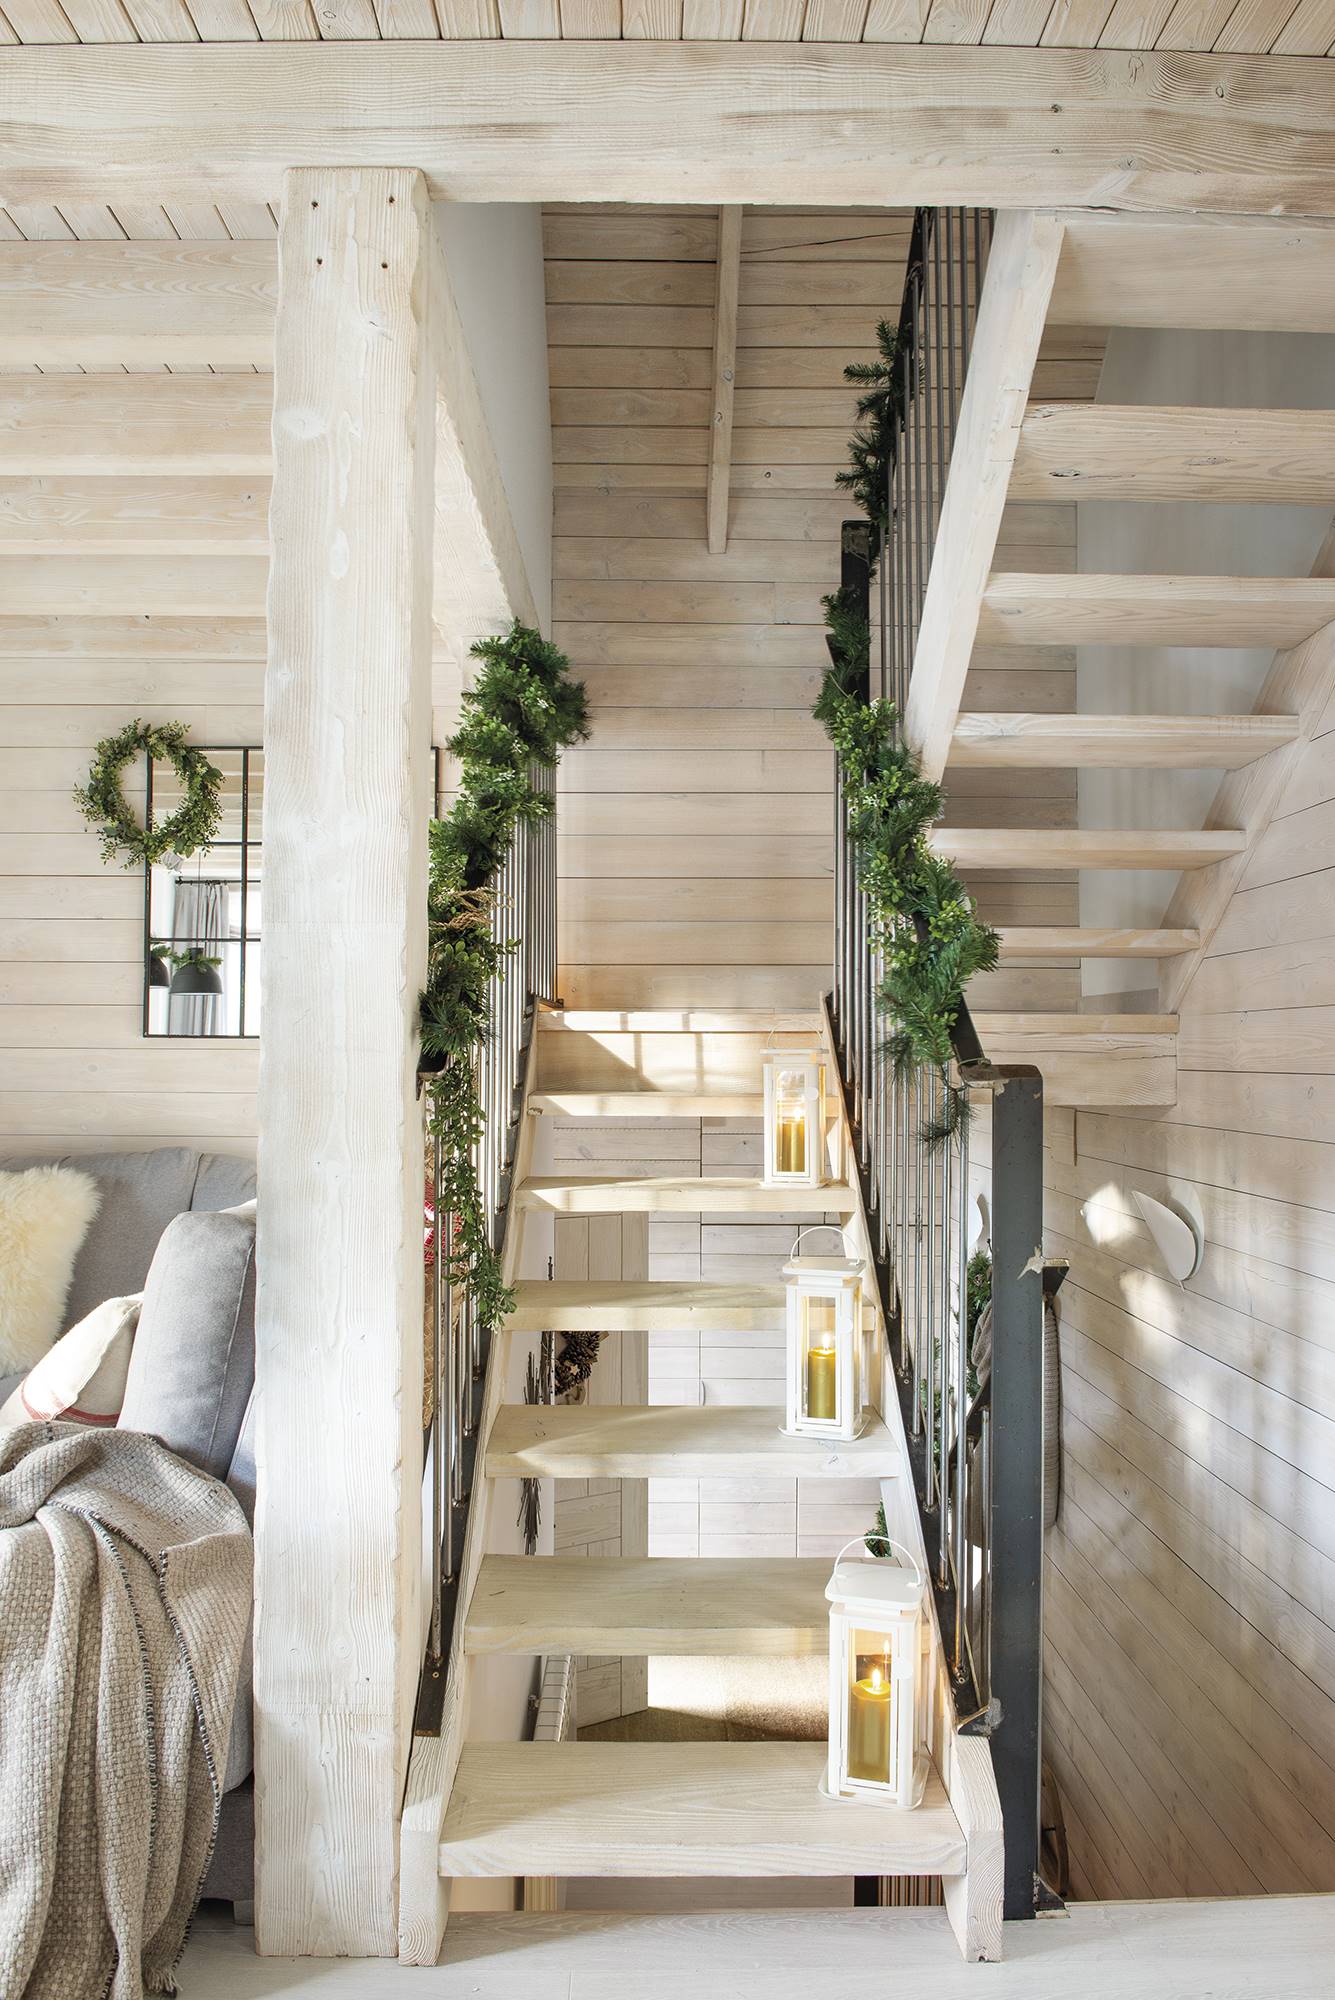 Escaleras decoradas con guirnaldas navideñas. 